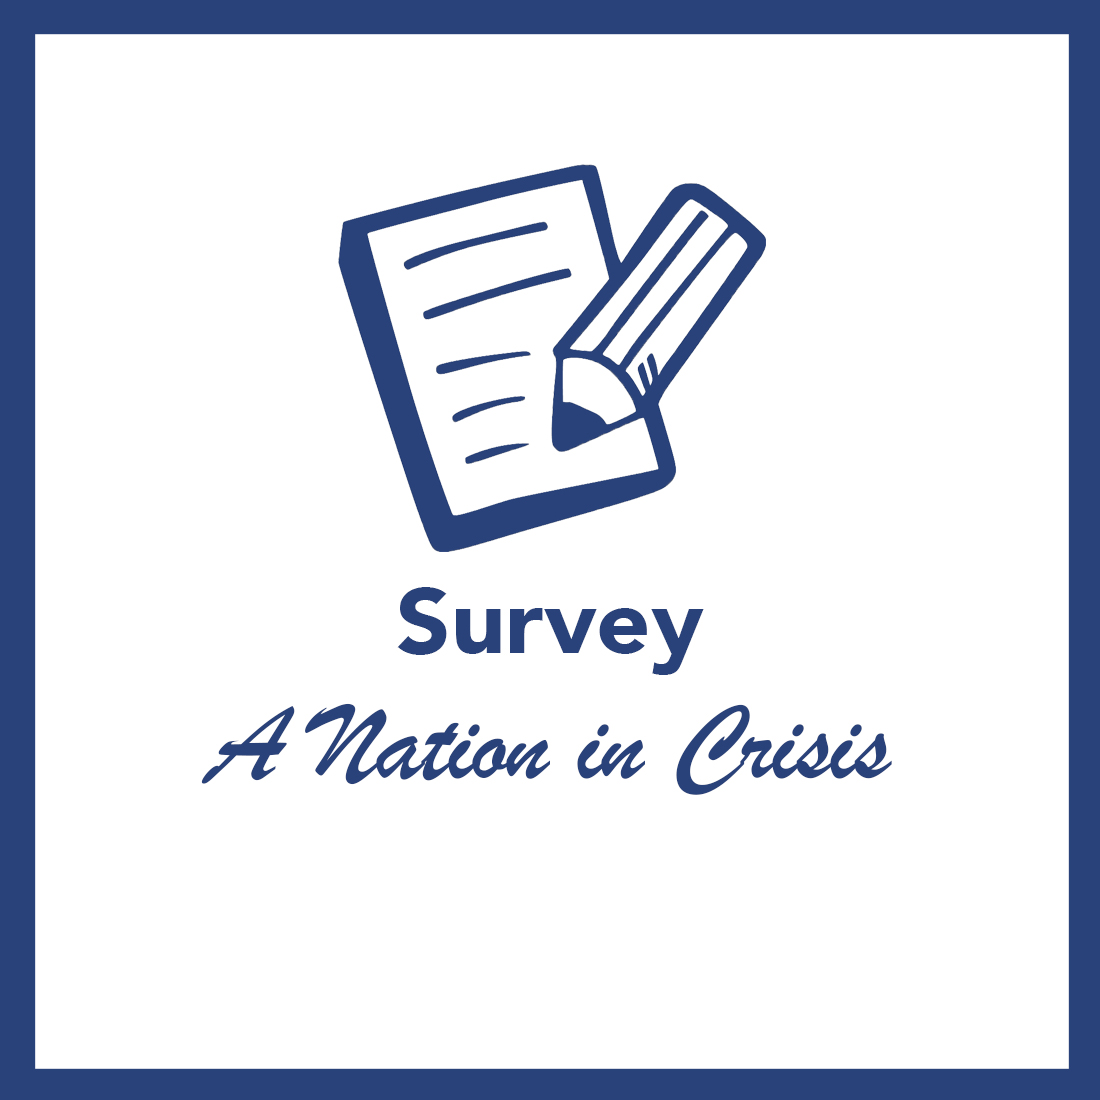 Crisis Survey.jpg